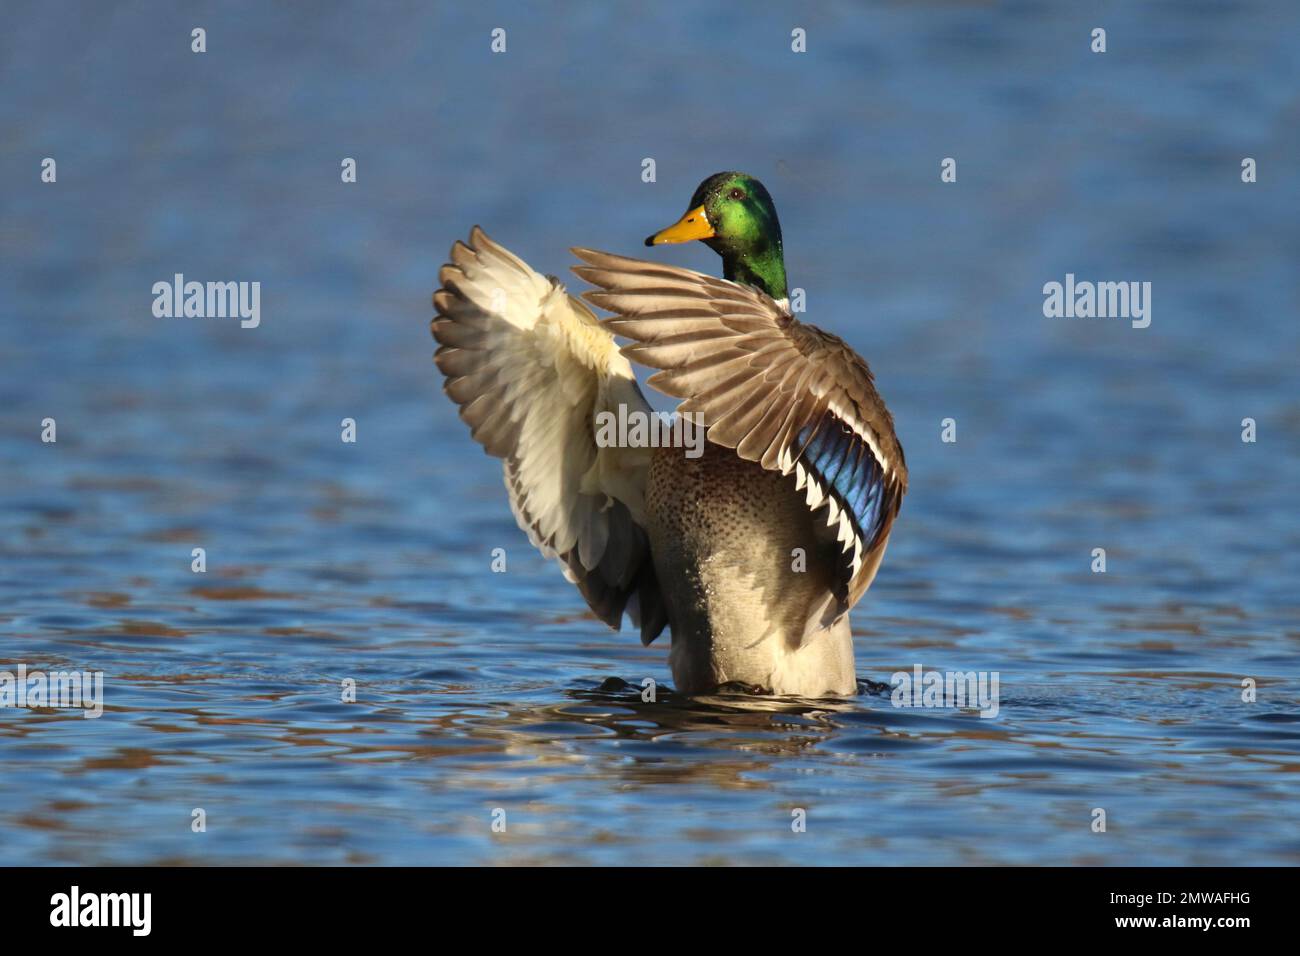 Drake mallard anatra Anas platyrhynchos flapping le sue vincite su un lago blu in inverno Foto Stock